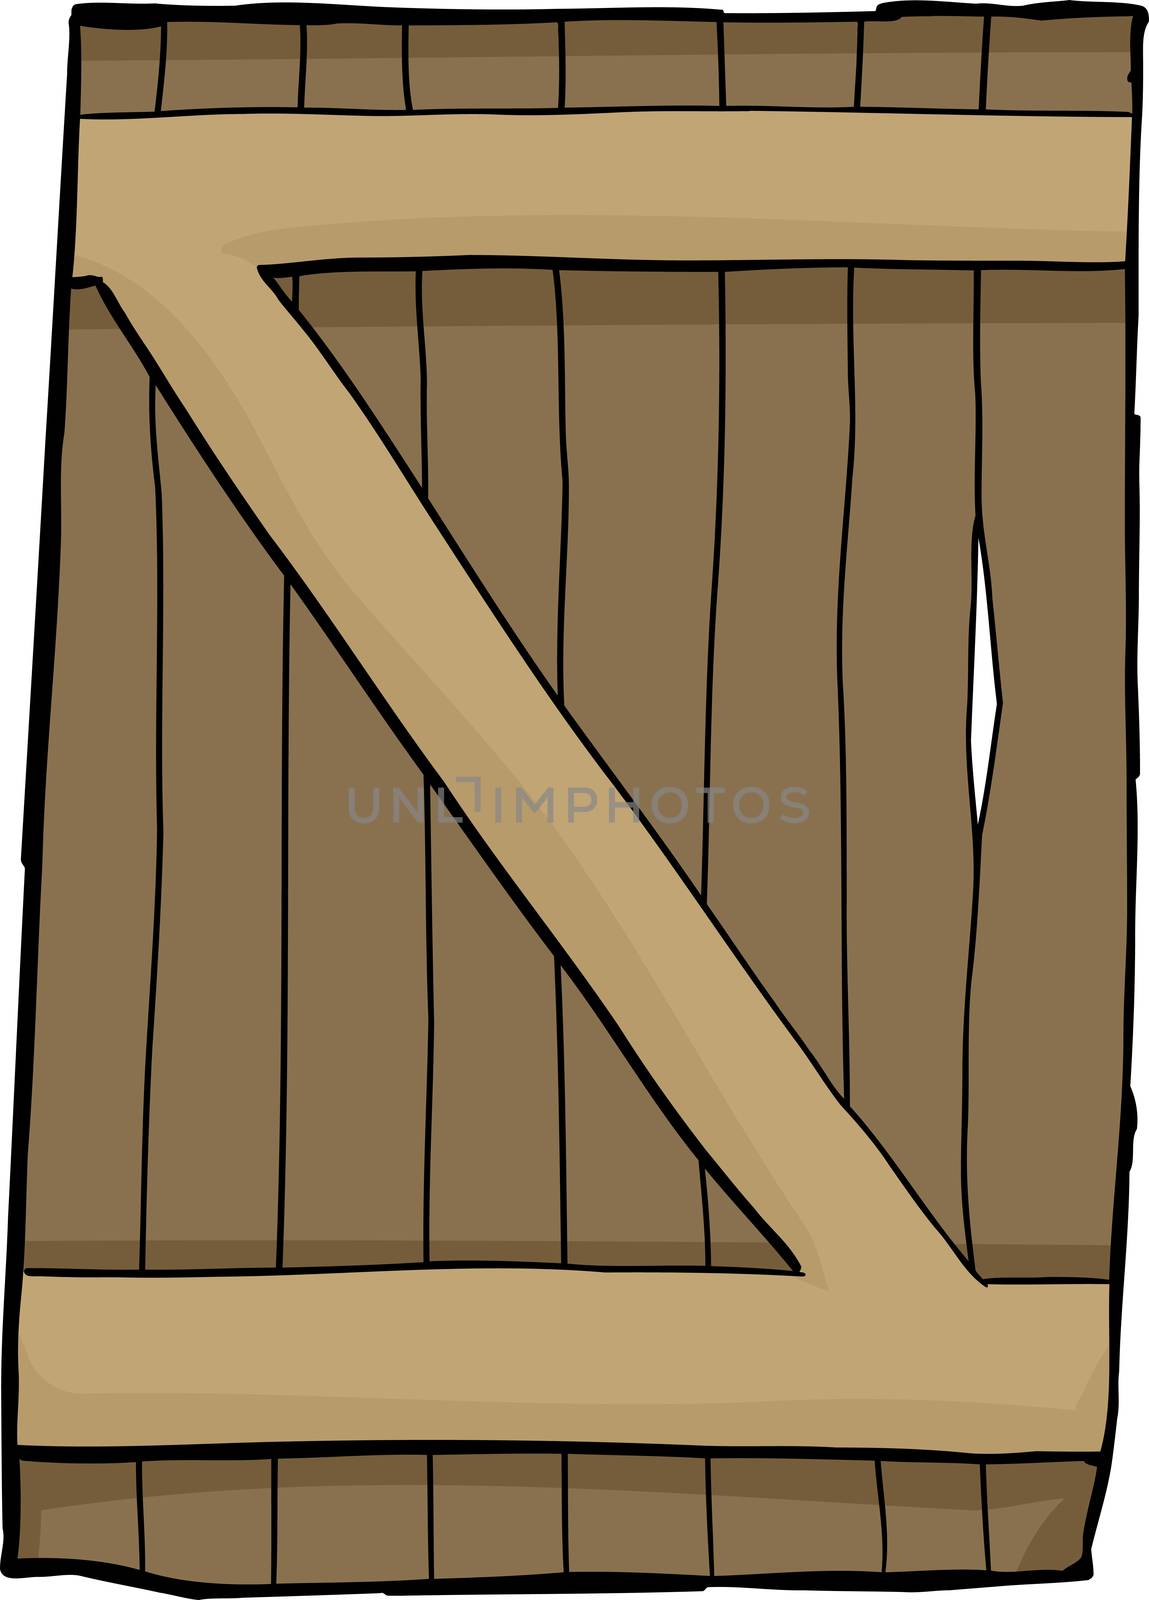 Single old reinforced wooden door by TheBlackRhino